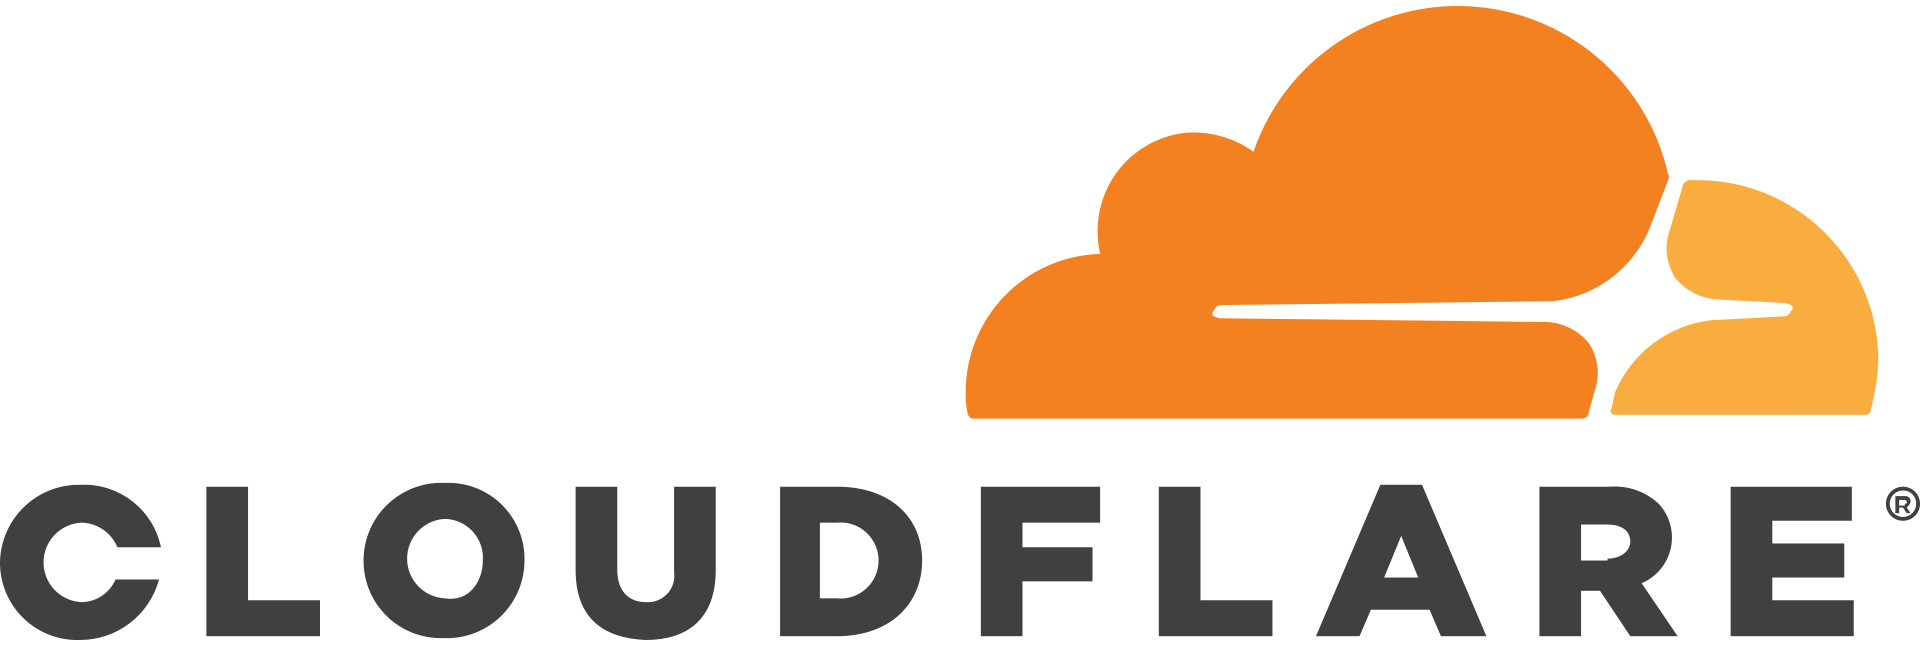 :cloudflare_logo: